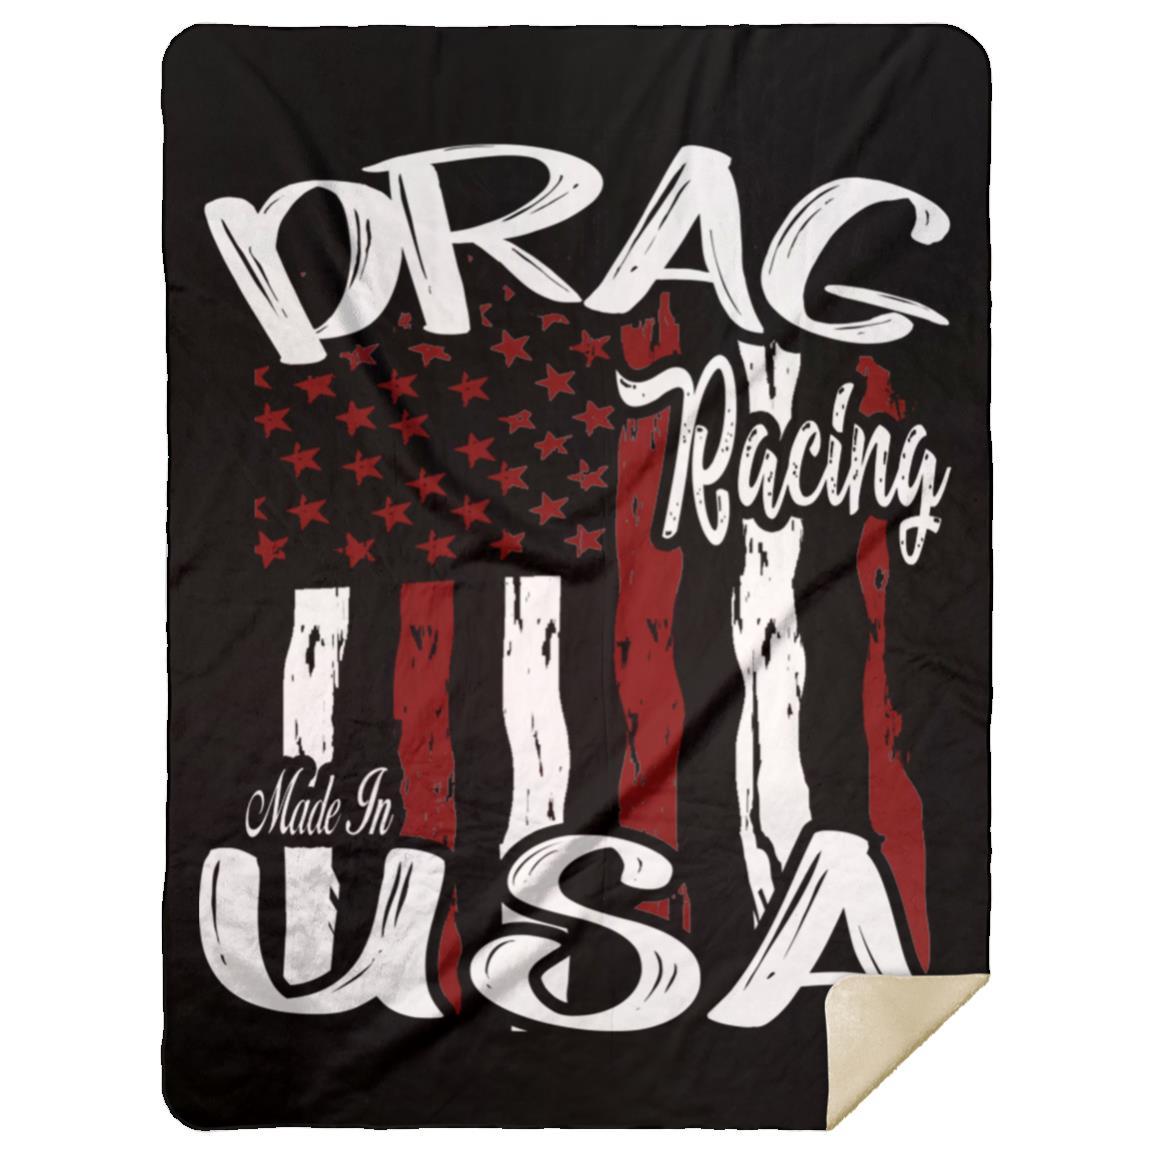 Drag Racing Made In USA Premium Mink Sherpa Blanket 60x80